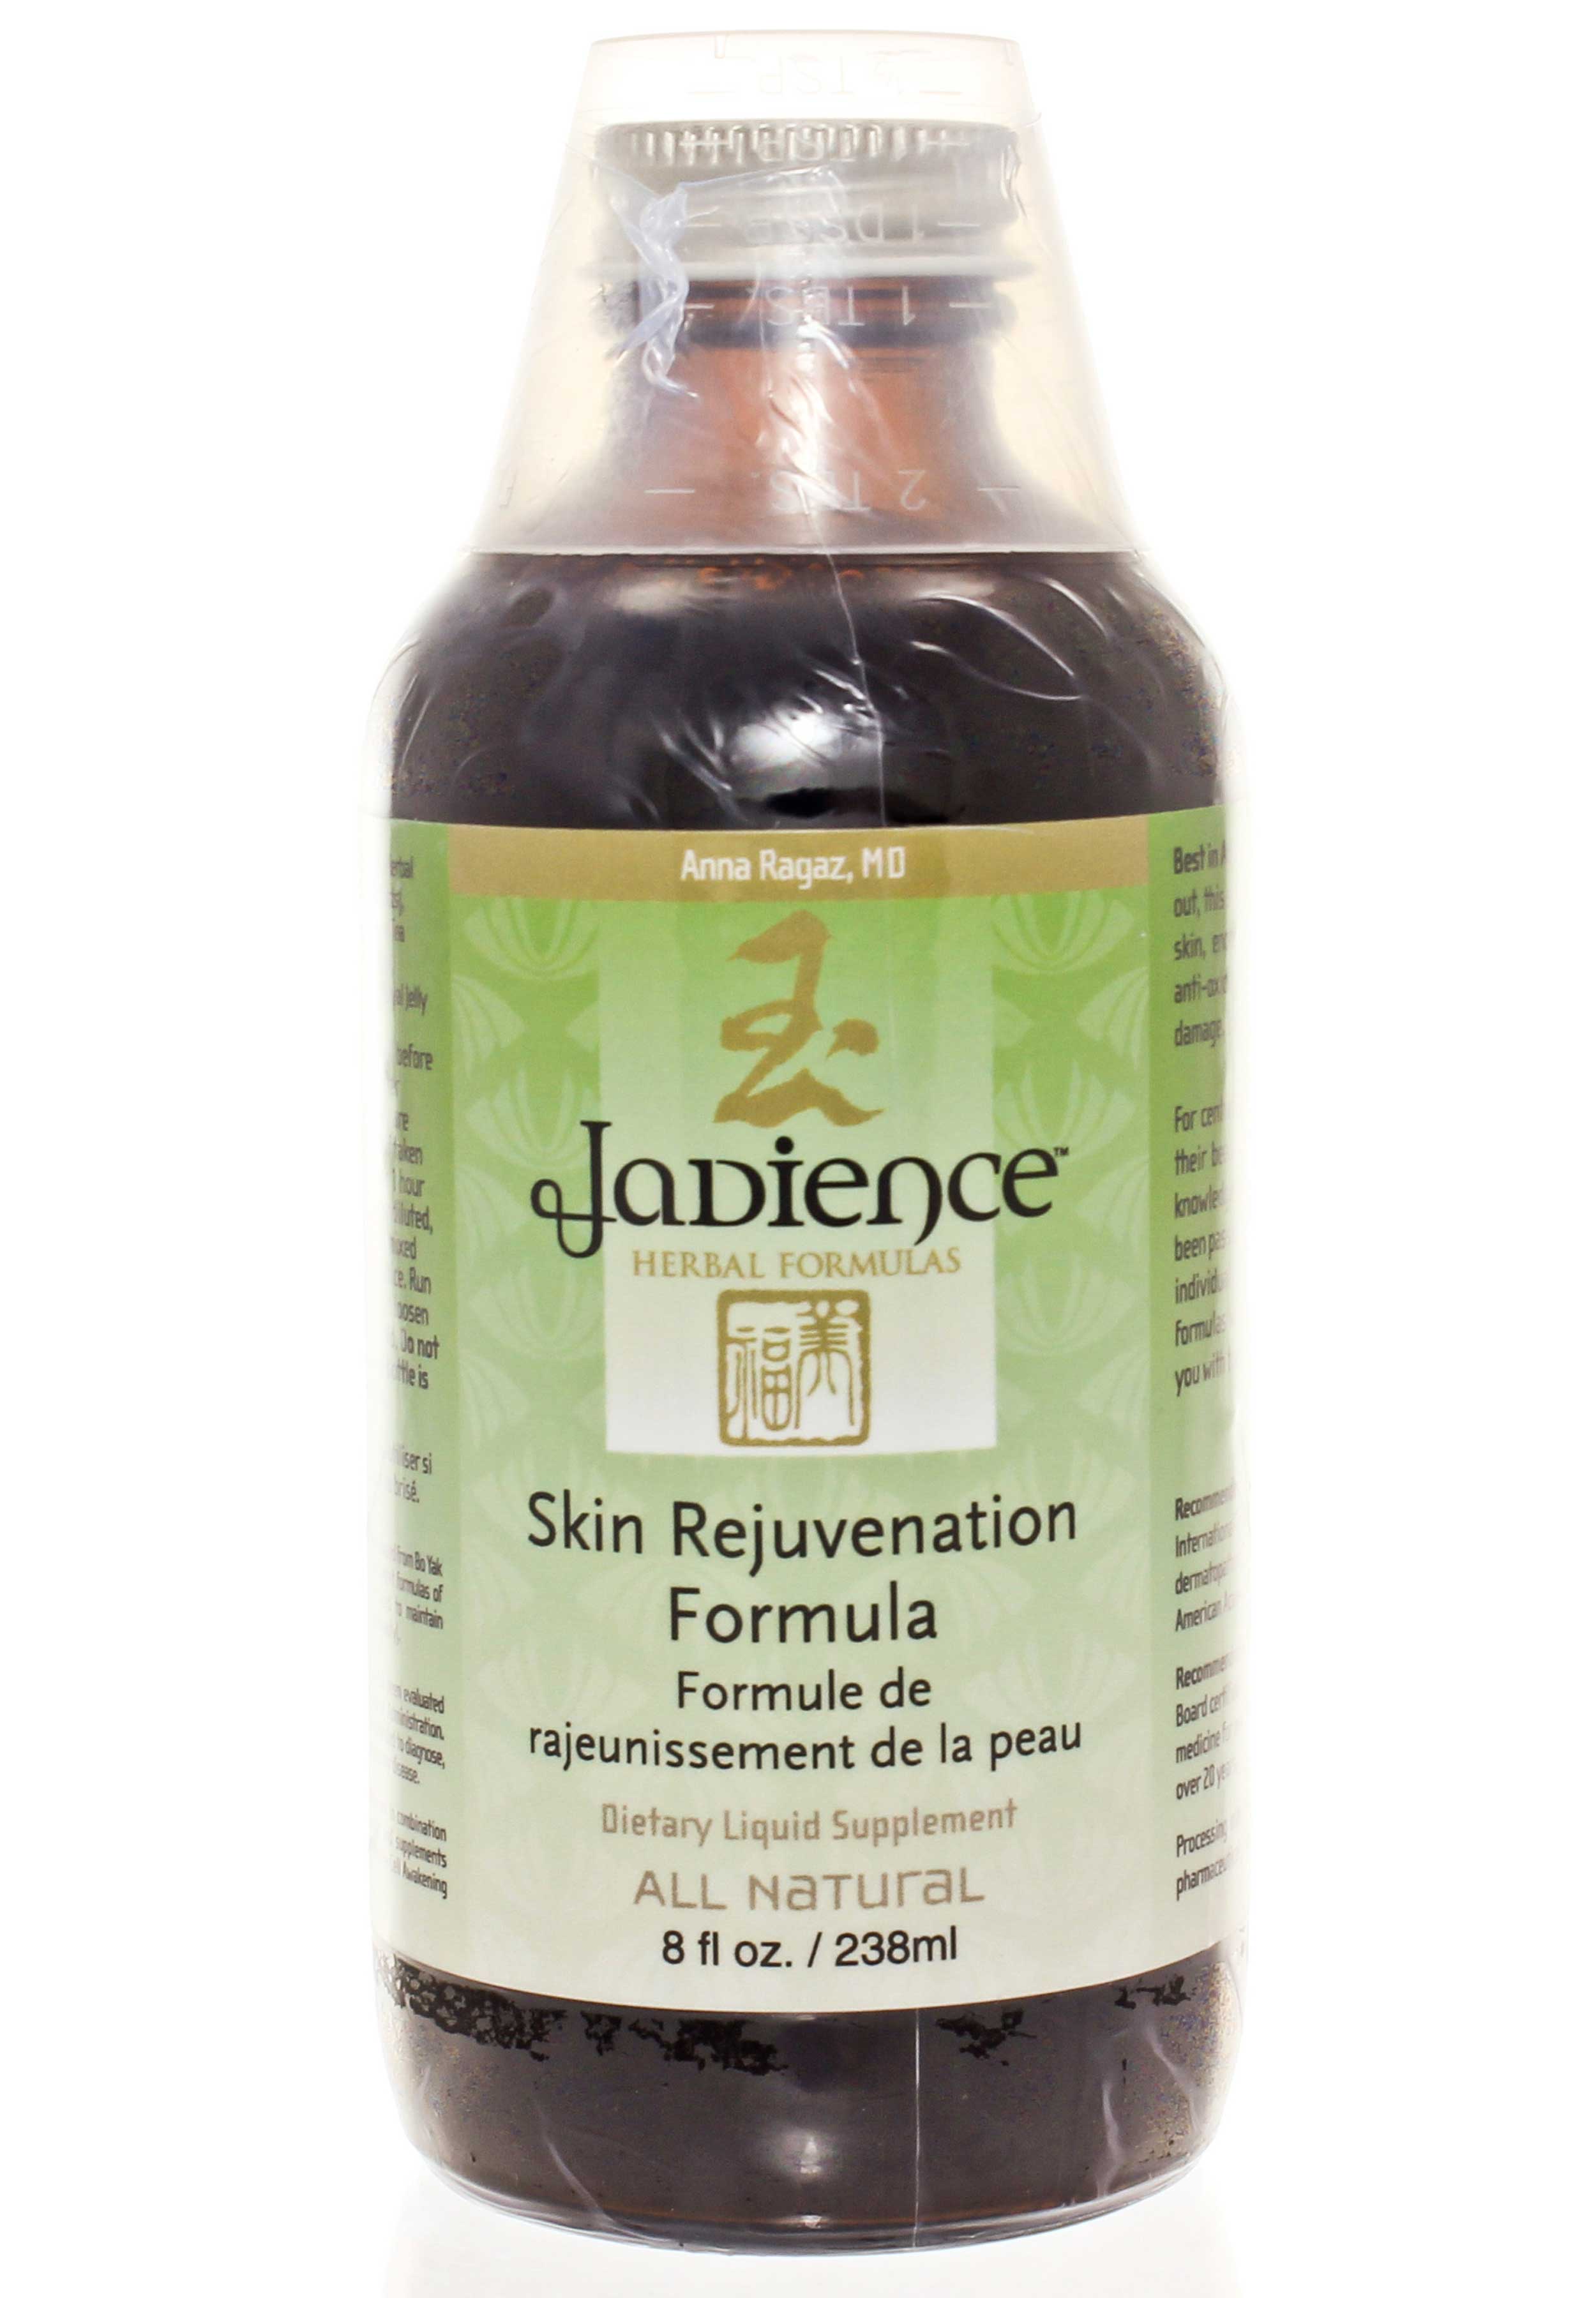 Jadience Herbal Formulas Skin Rejuvenation Formula (Internal Supplement)